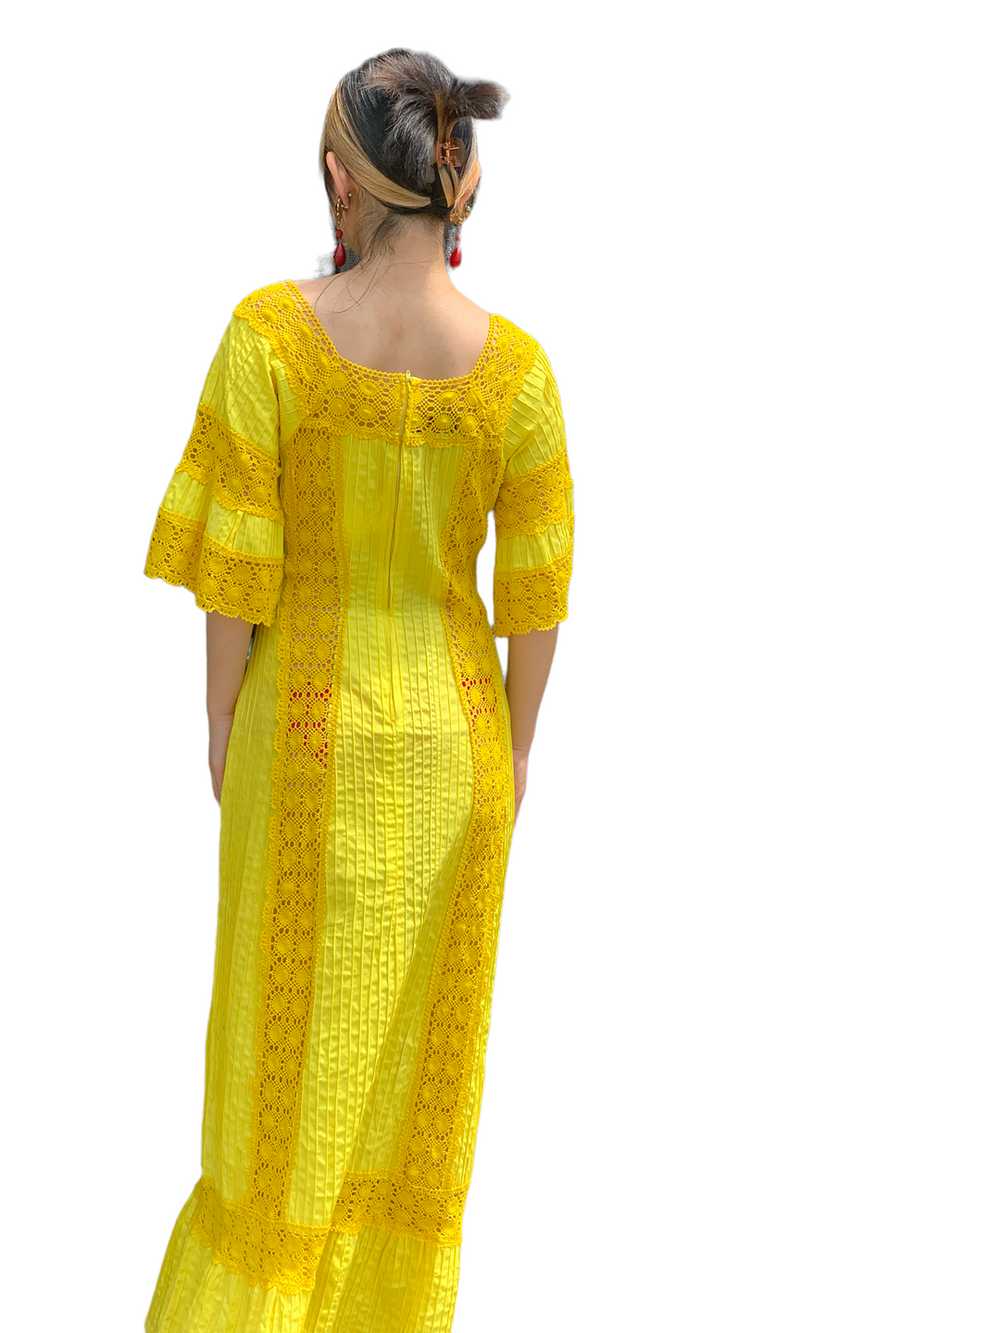 Vintage Yellow Lace Traditonal Dress - image 2